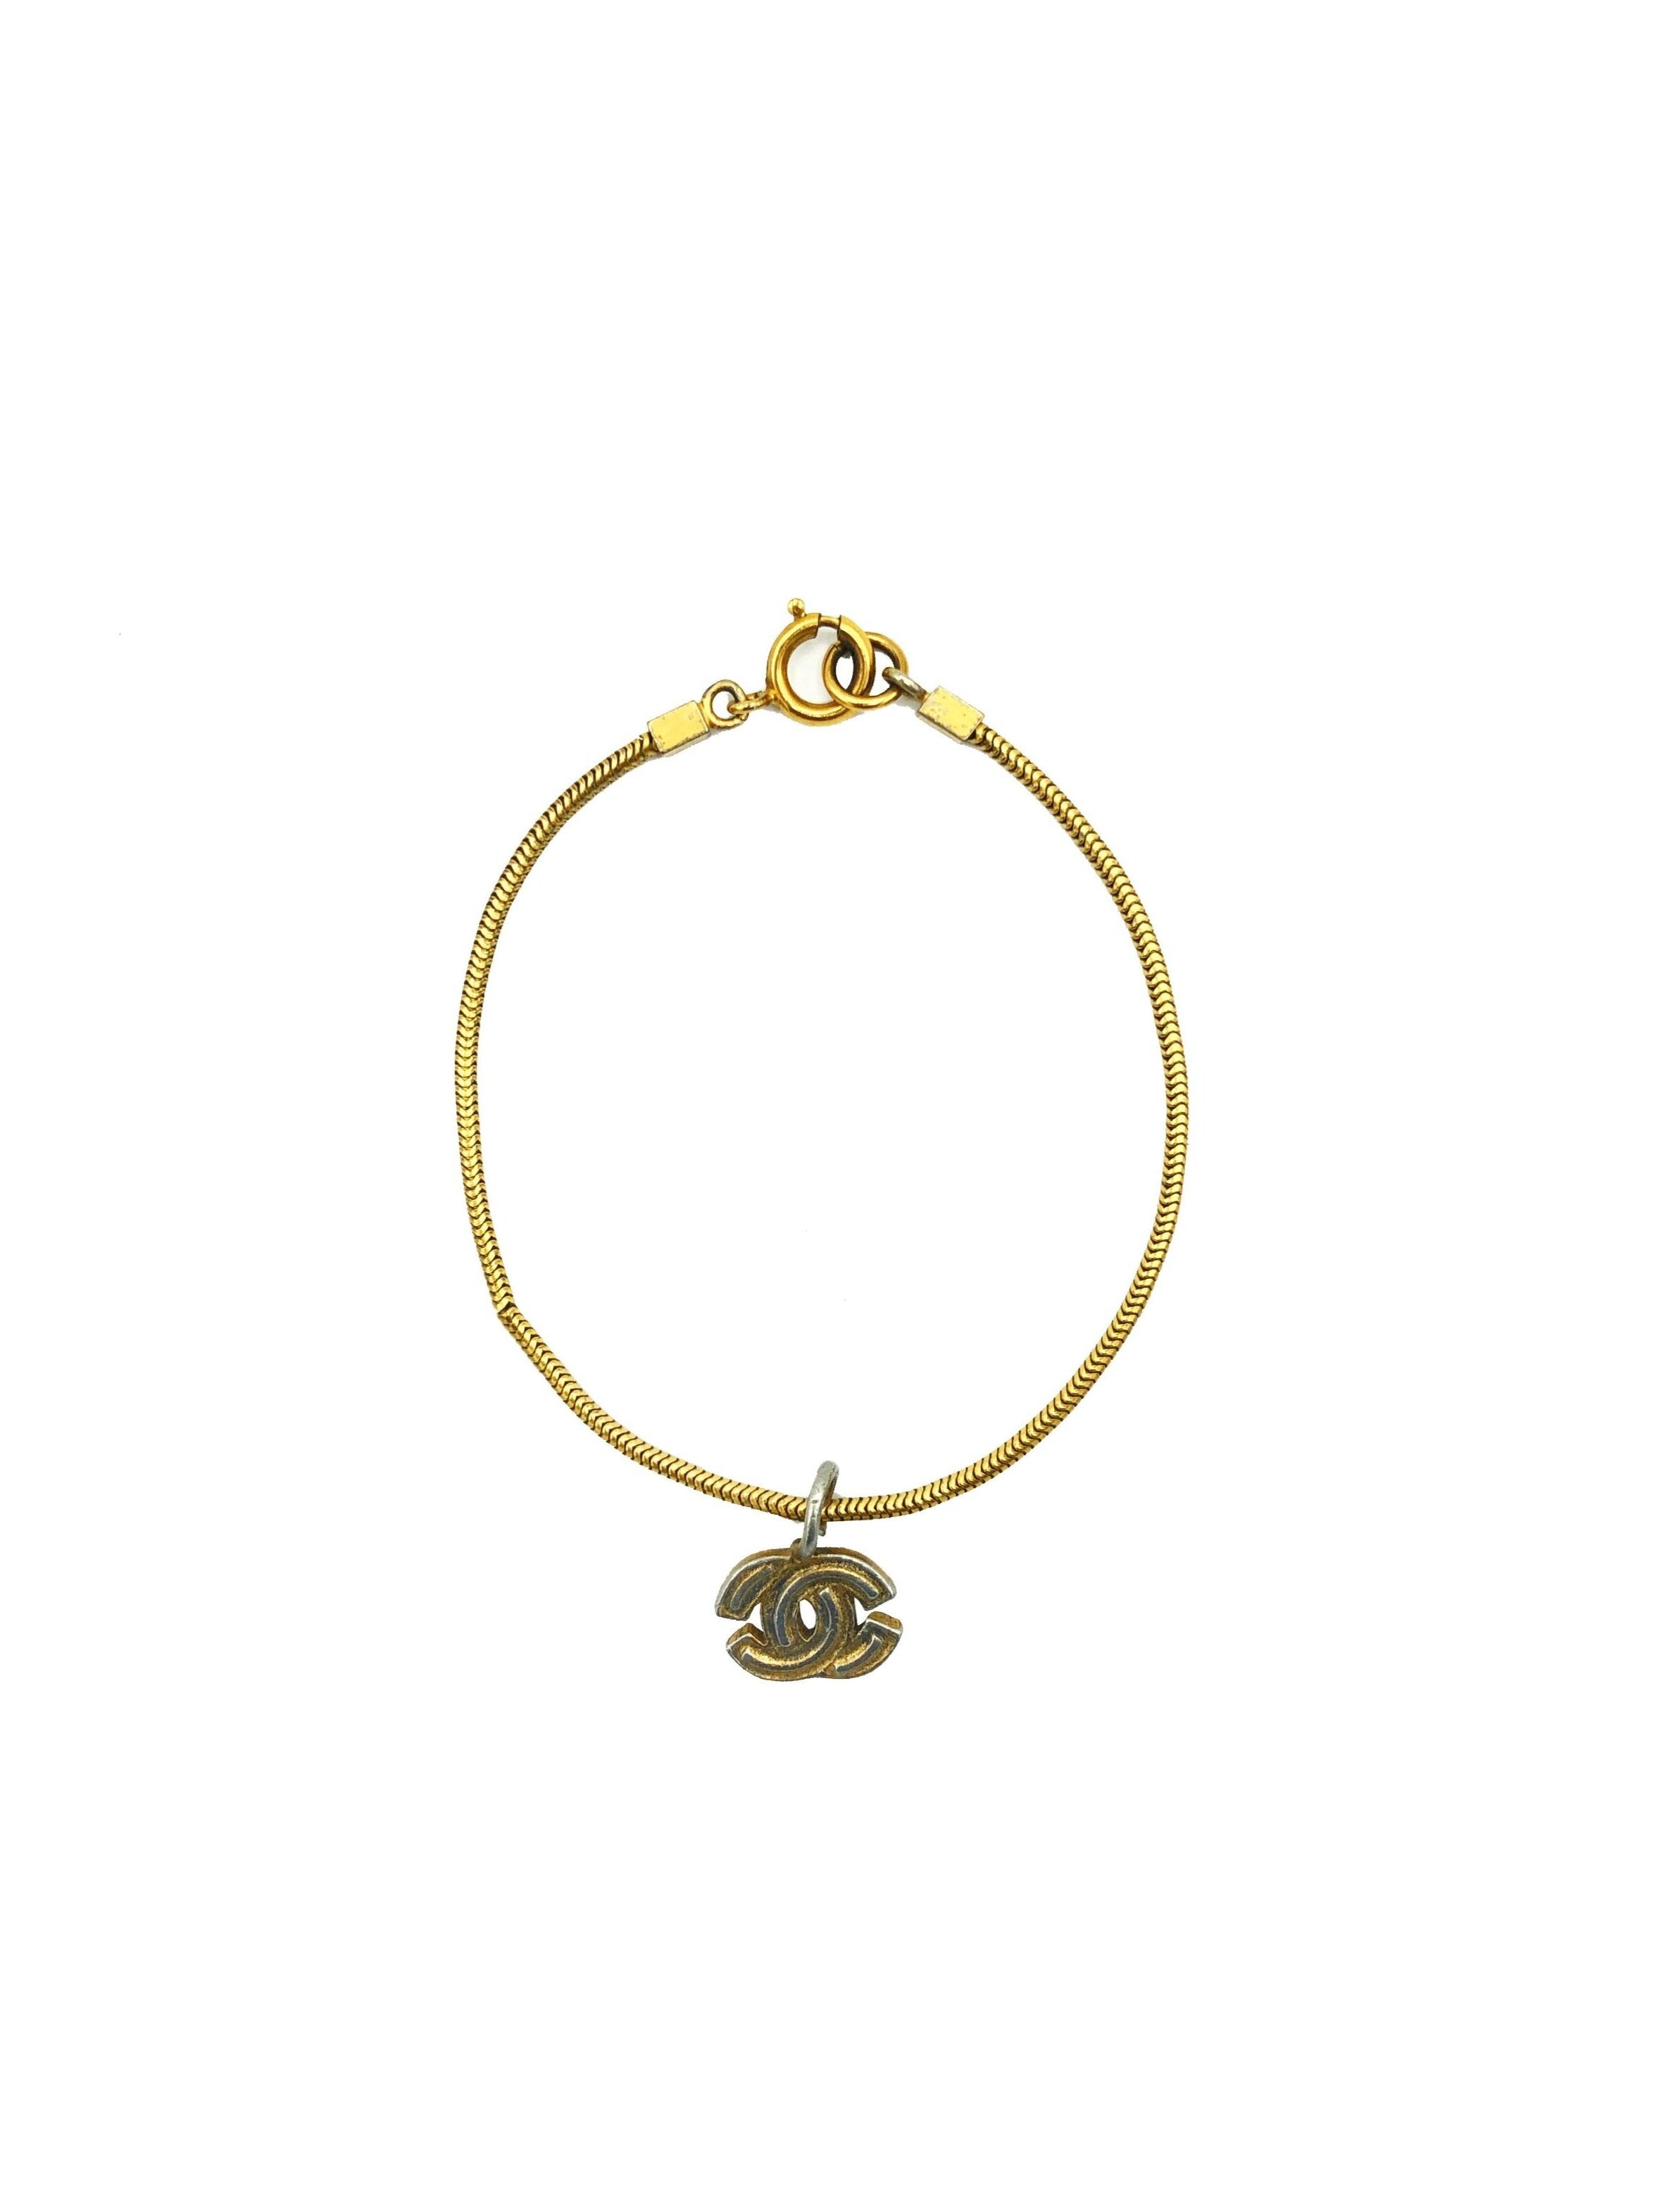 Chanel Gold CC Bracelet